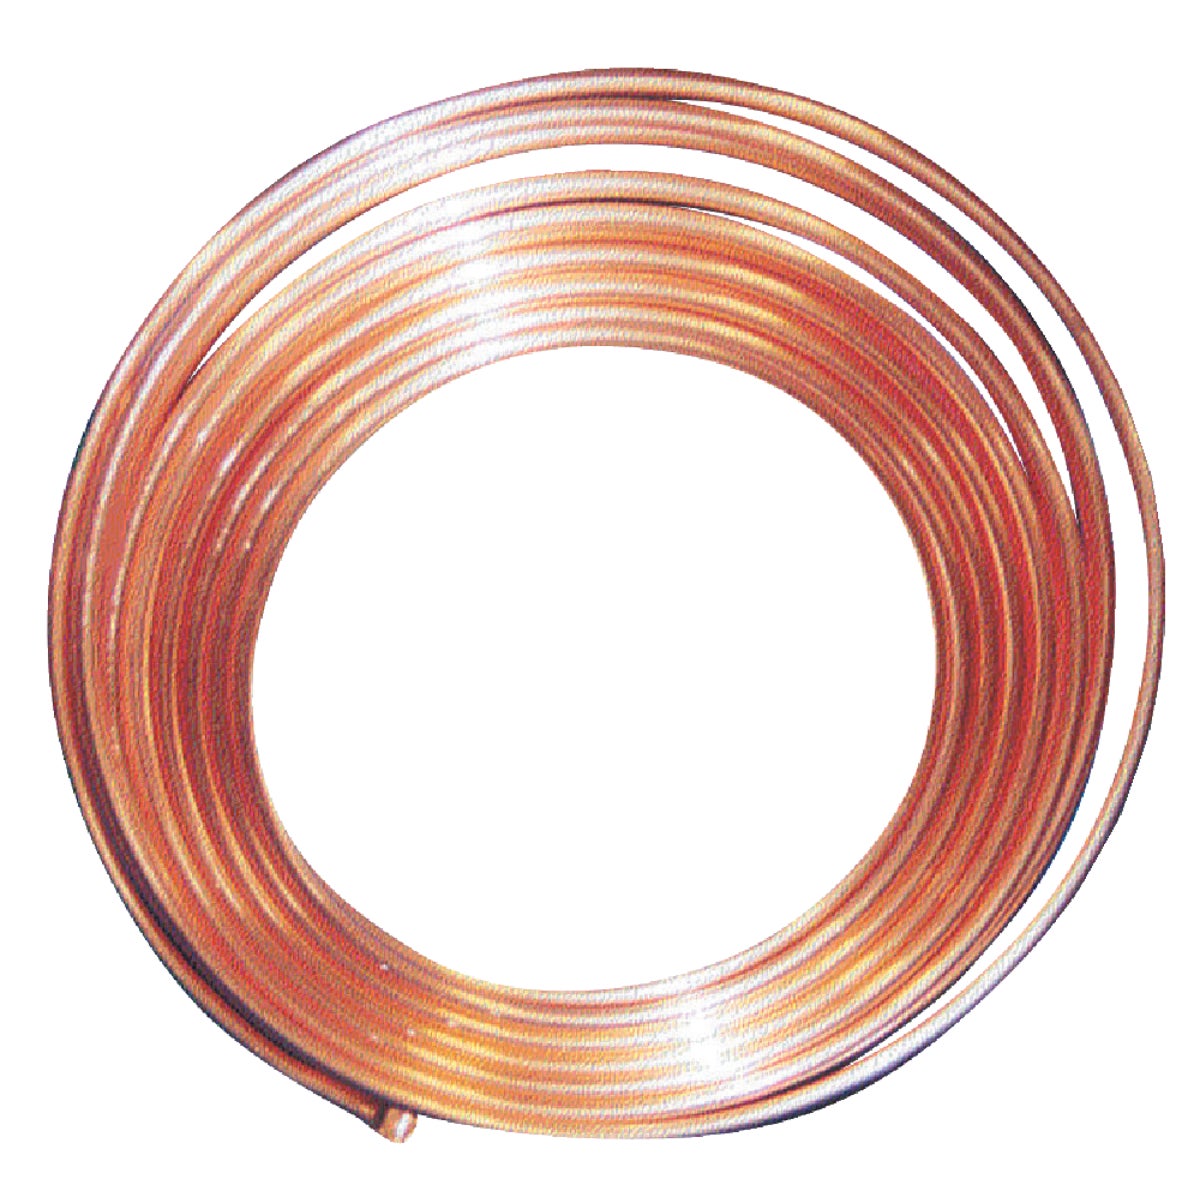 B&K 3/8 In. ID x 60 Ft. Type L Copper Tubing